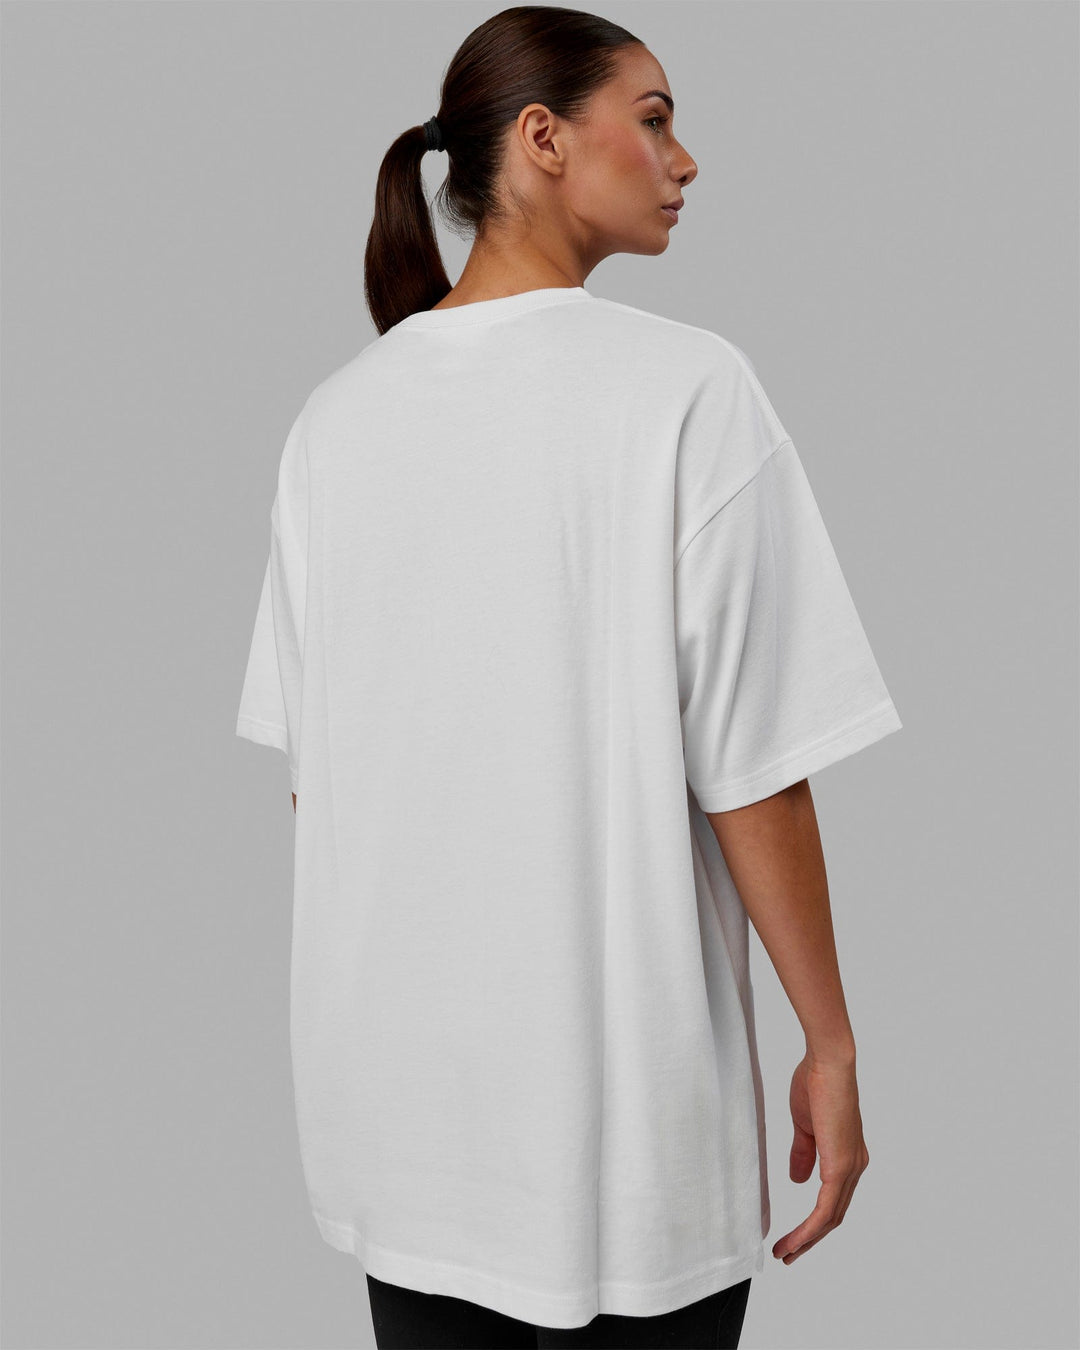 Woman wearing Unisex Stamped 2.0 Heavyweight Tee Oversize - White